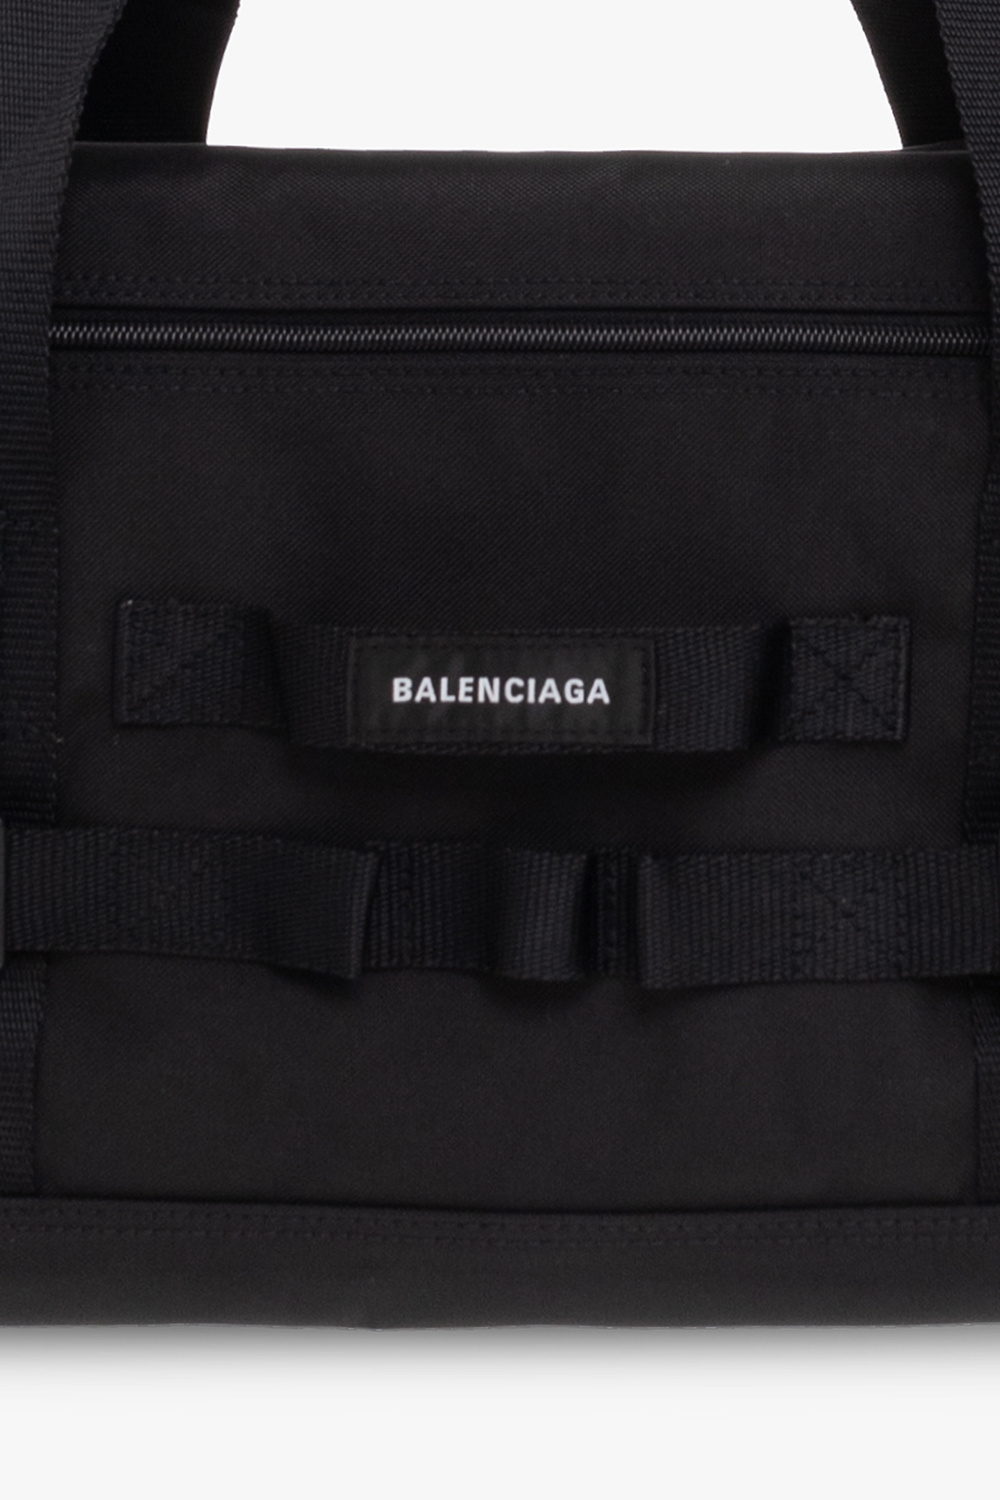 Balenciaga Holdall bag